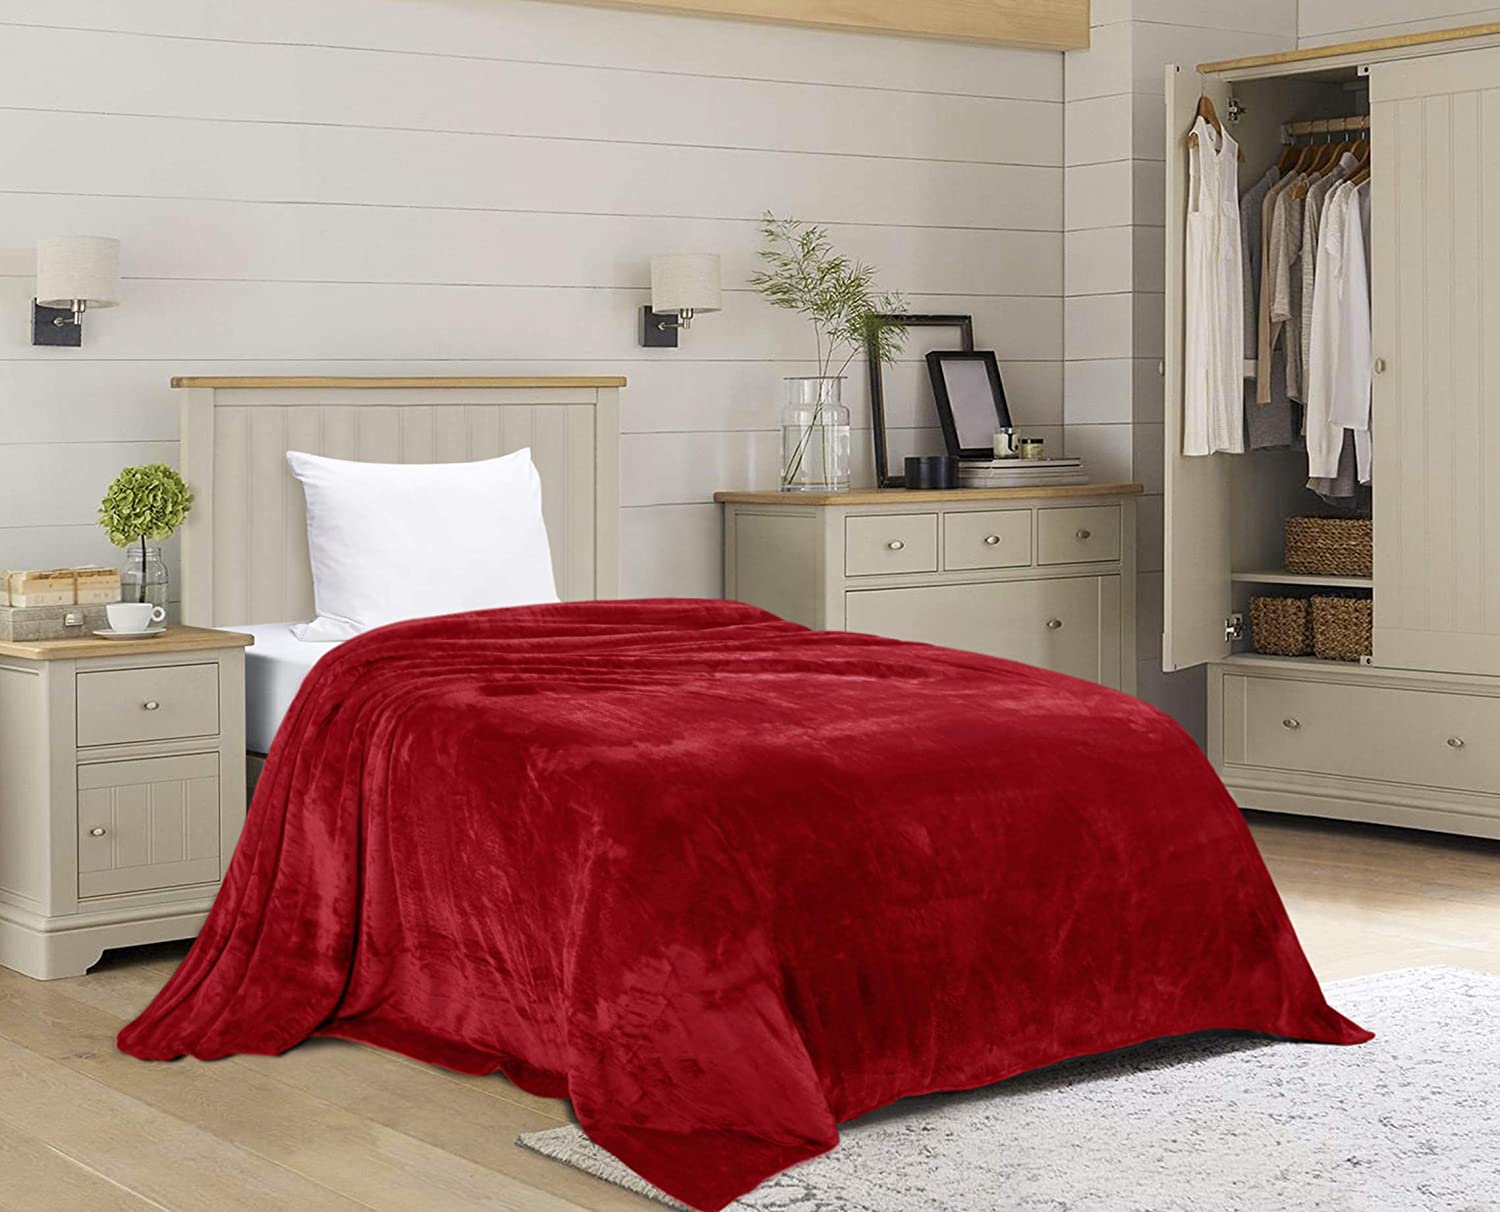 Burgundy 300 GSM Luxury Twin Size Bed Blanket - Soft Fuzzy Fleece Blanket